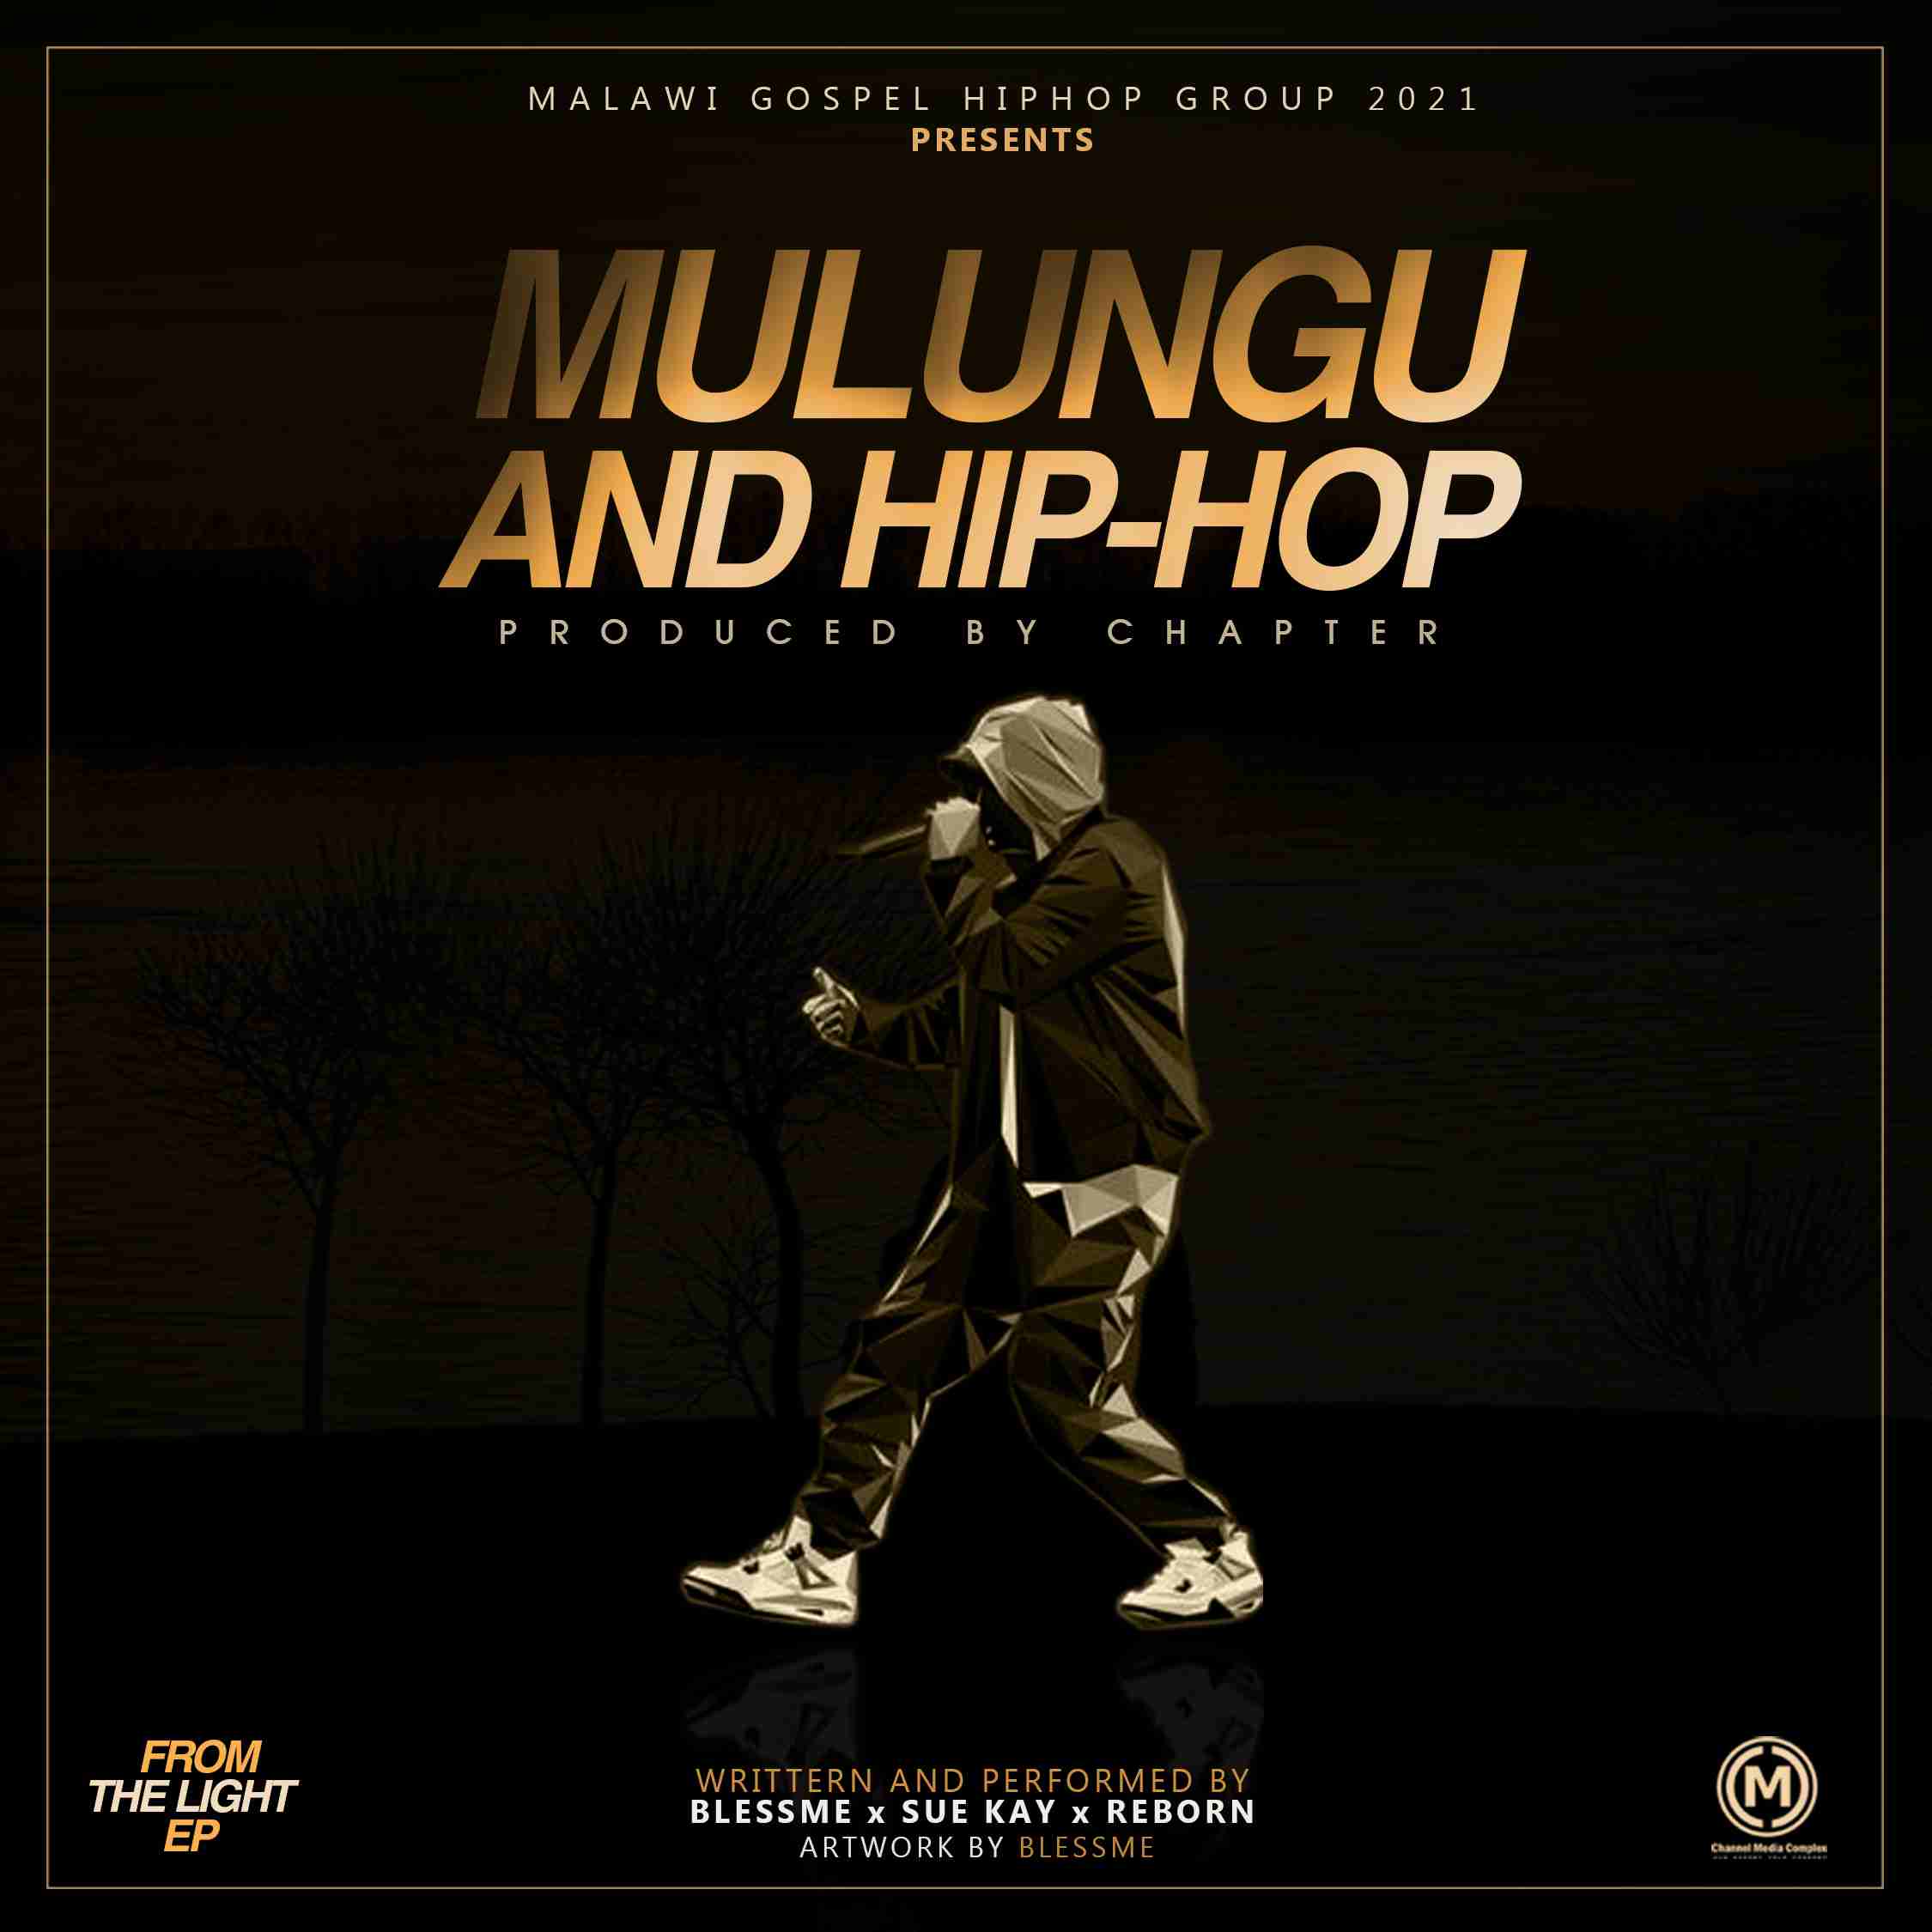 Mulungu and Hip-Hop